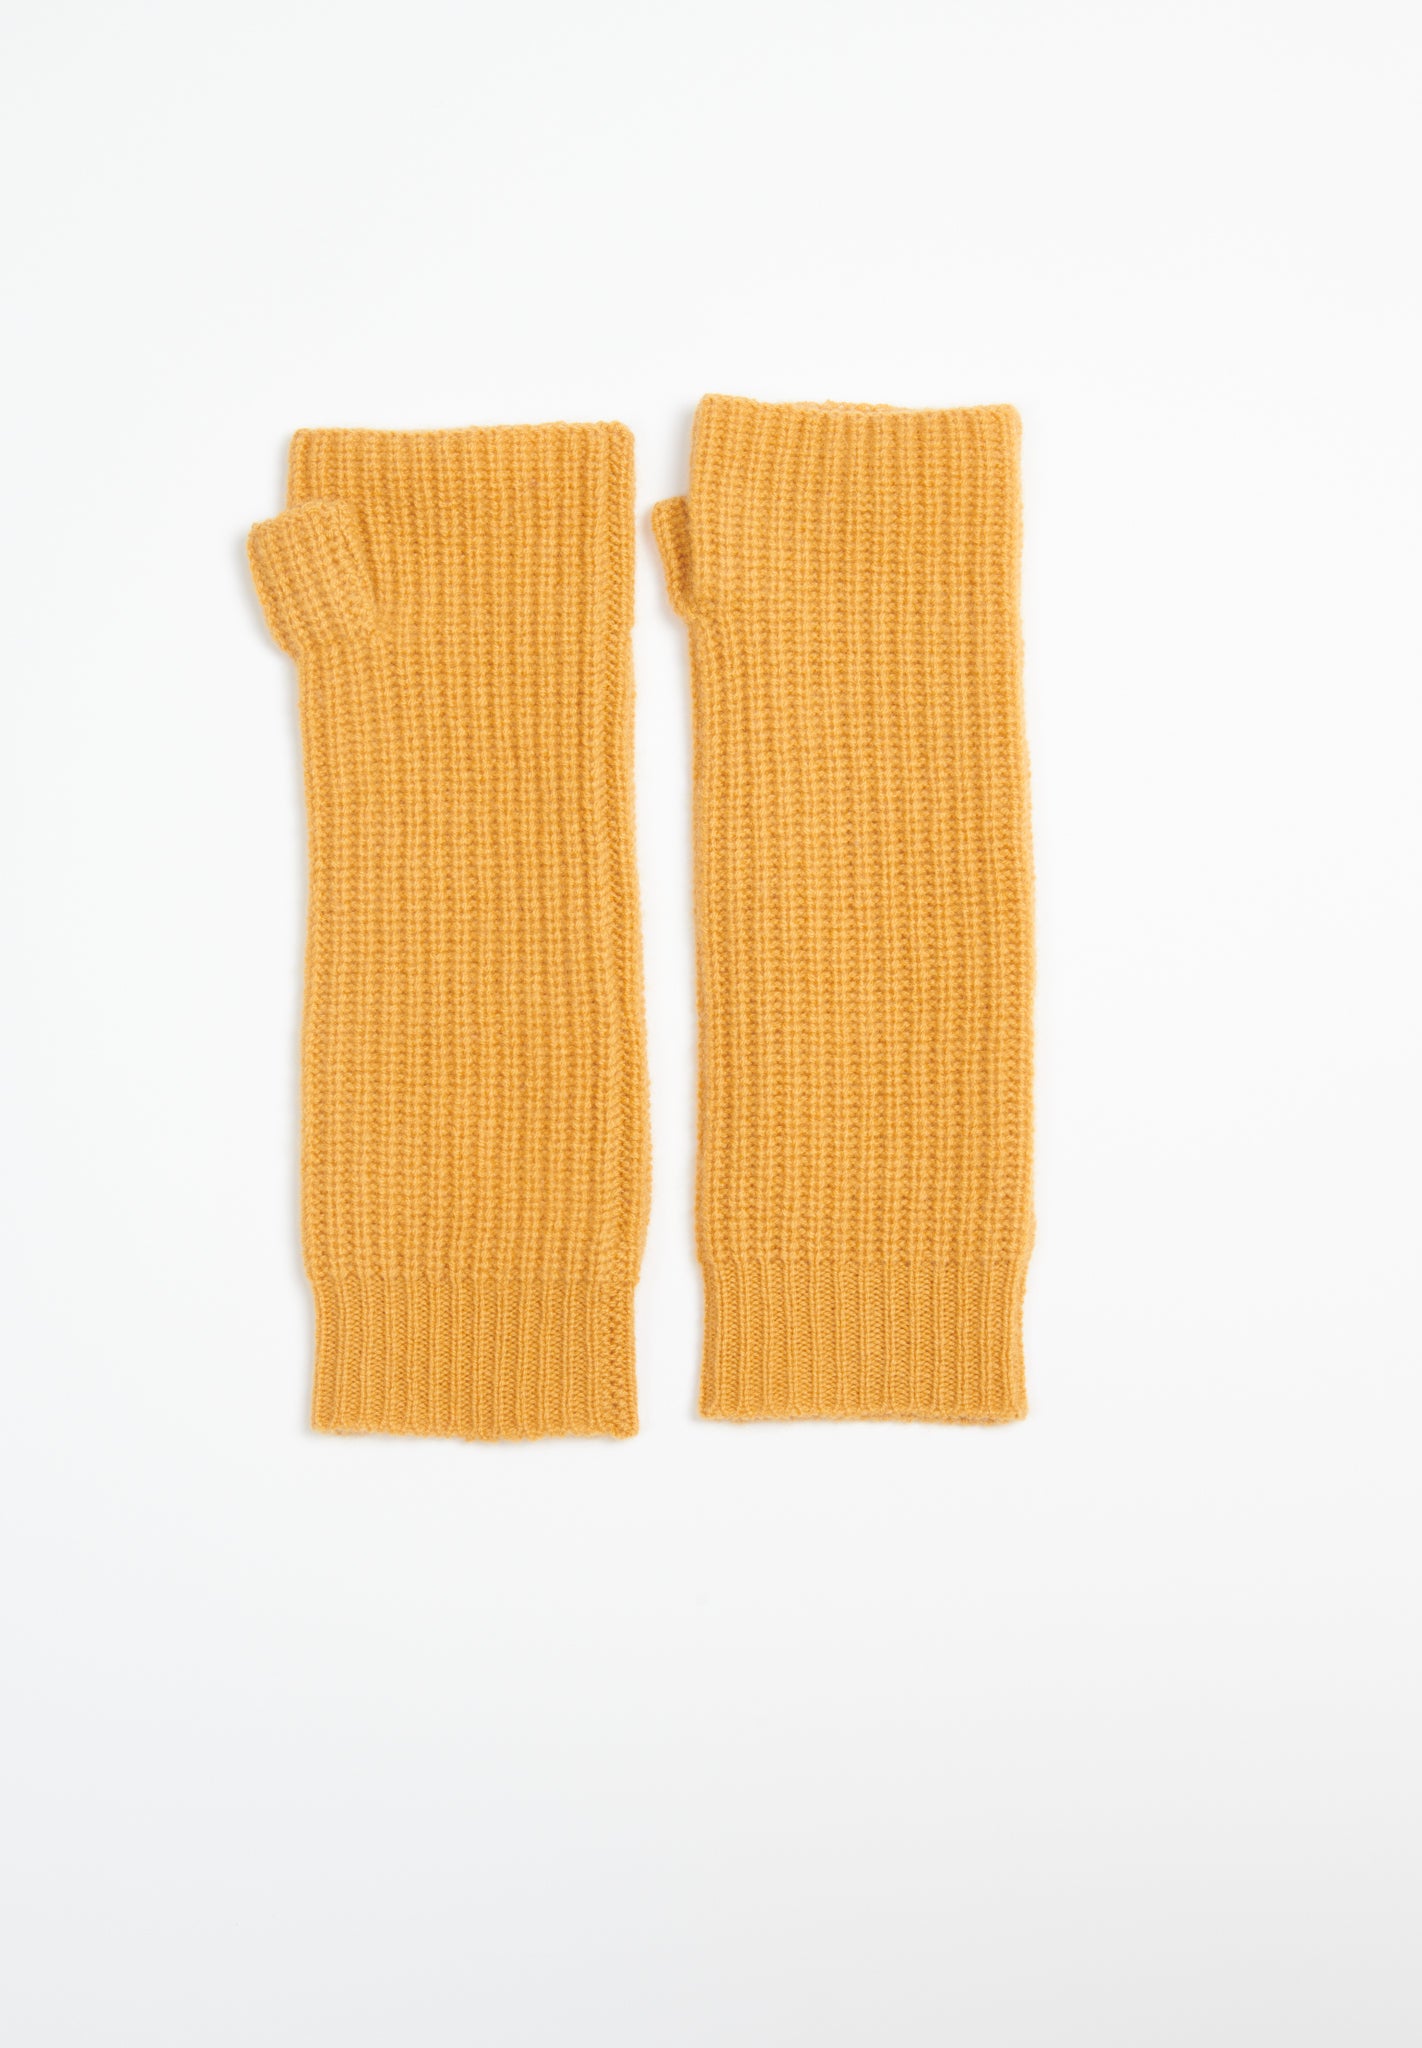 UNI 8 English rib knitted mittens in mustard yellow 4-thread cashmere